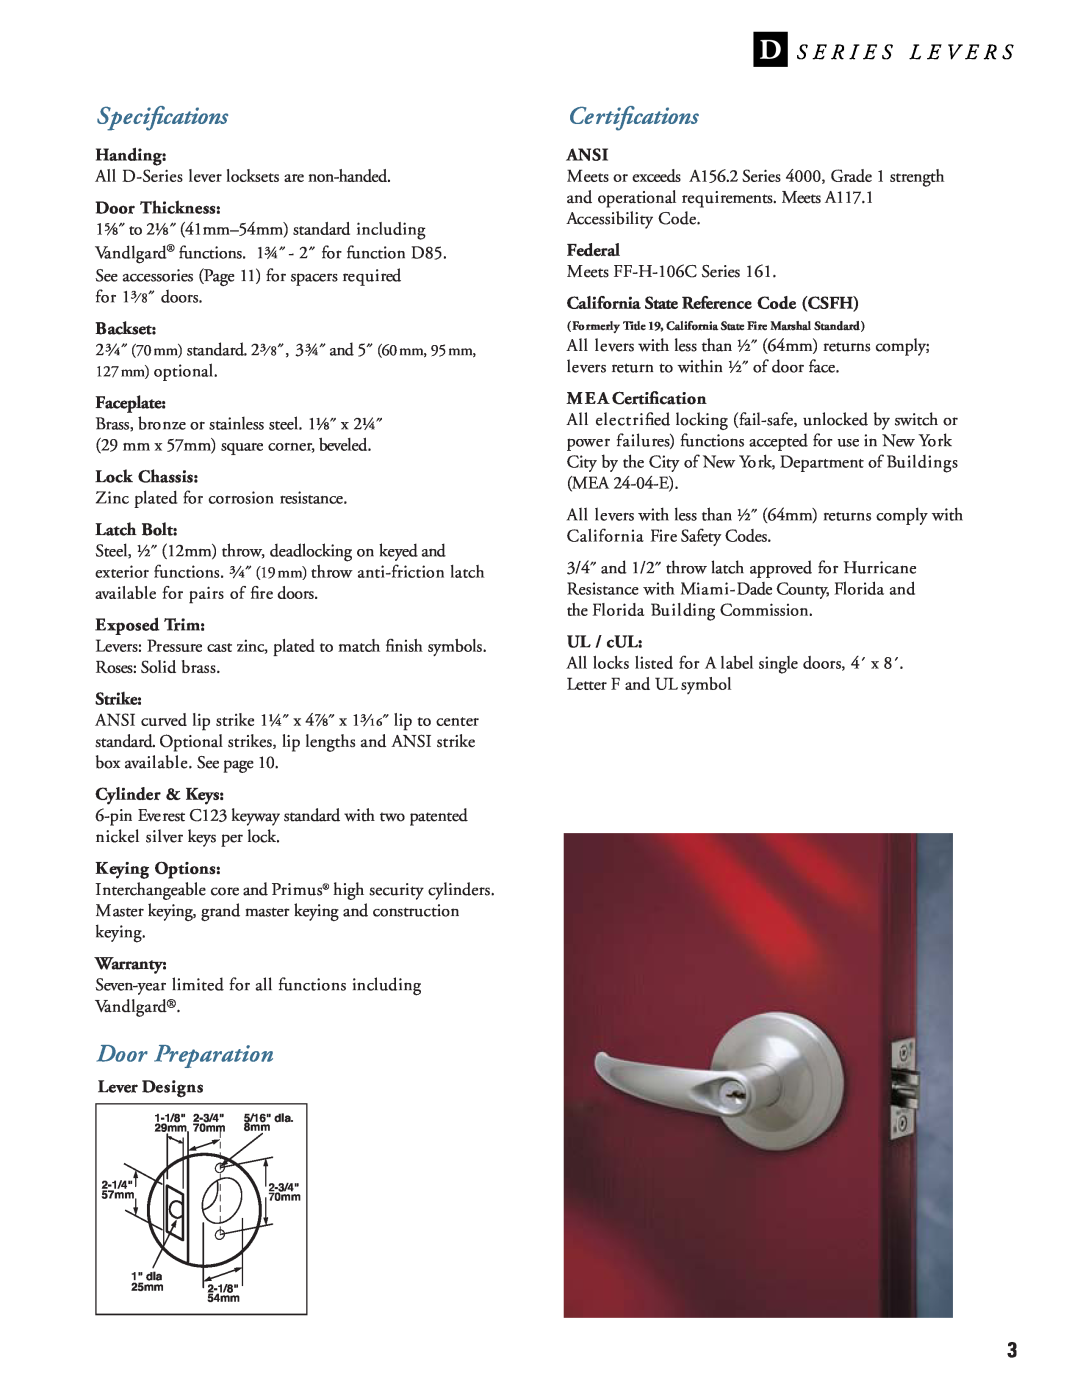 Schlage D-Series manual Speciﬁcations, Door Preparation, Certiﬁcations 